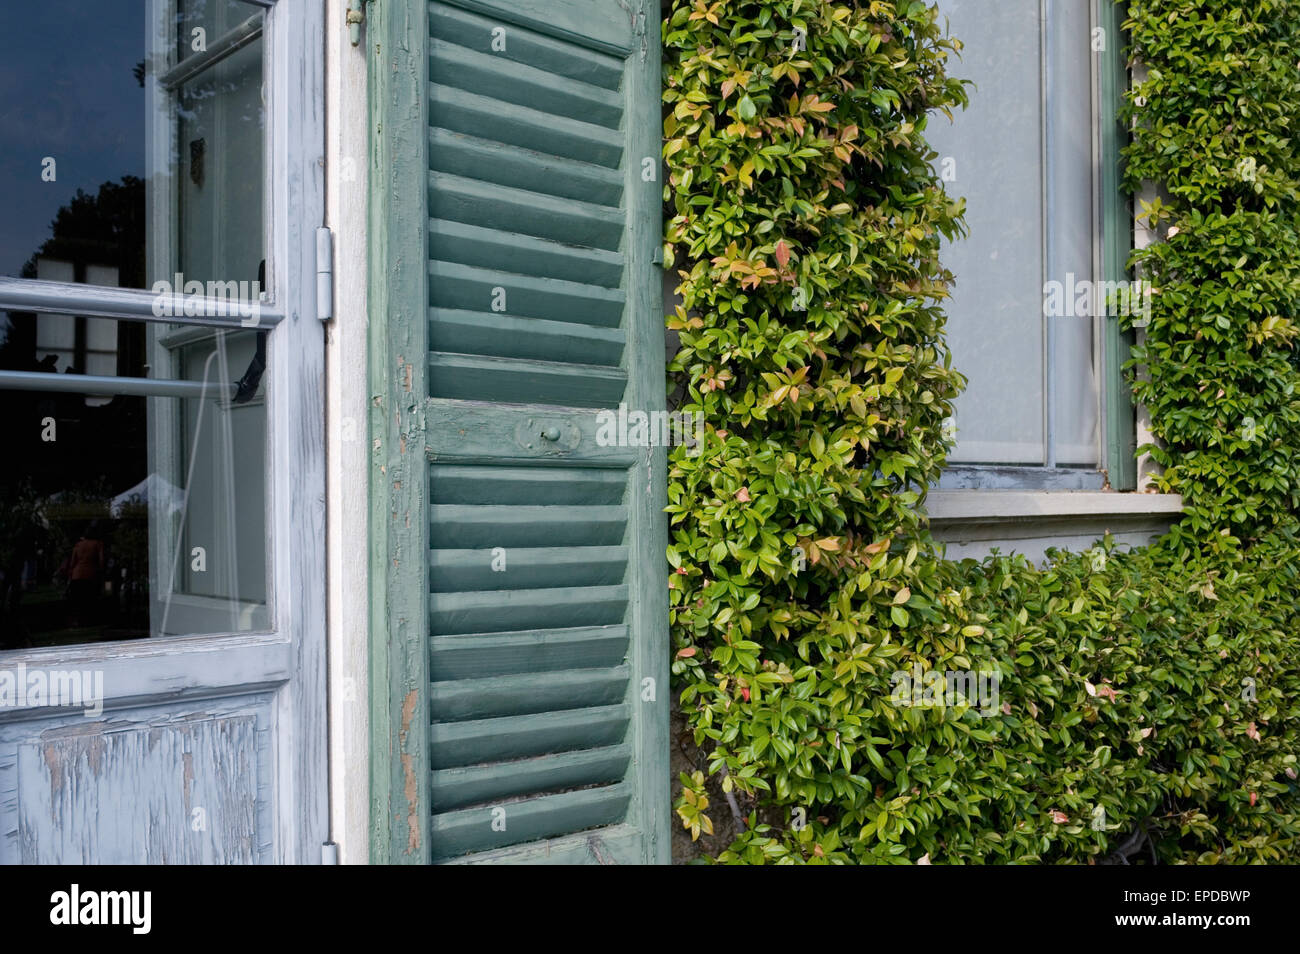 Fachada de la casa con planta trepadora, Italia Foto de stock